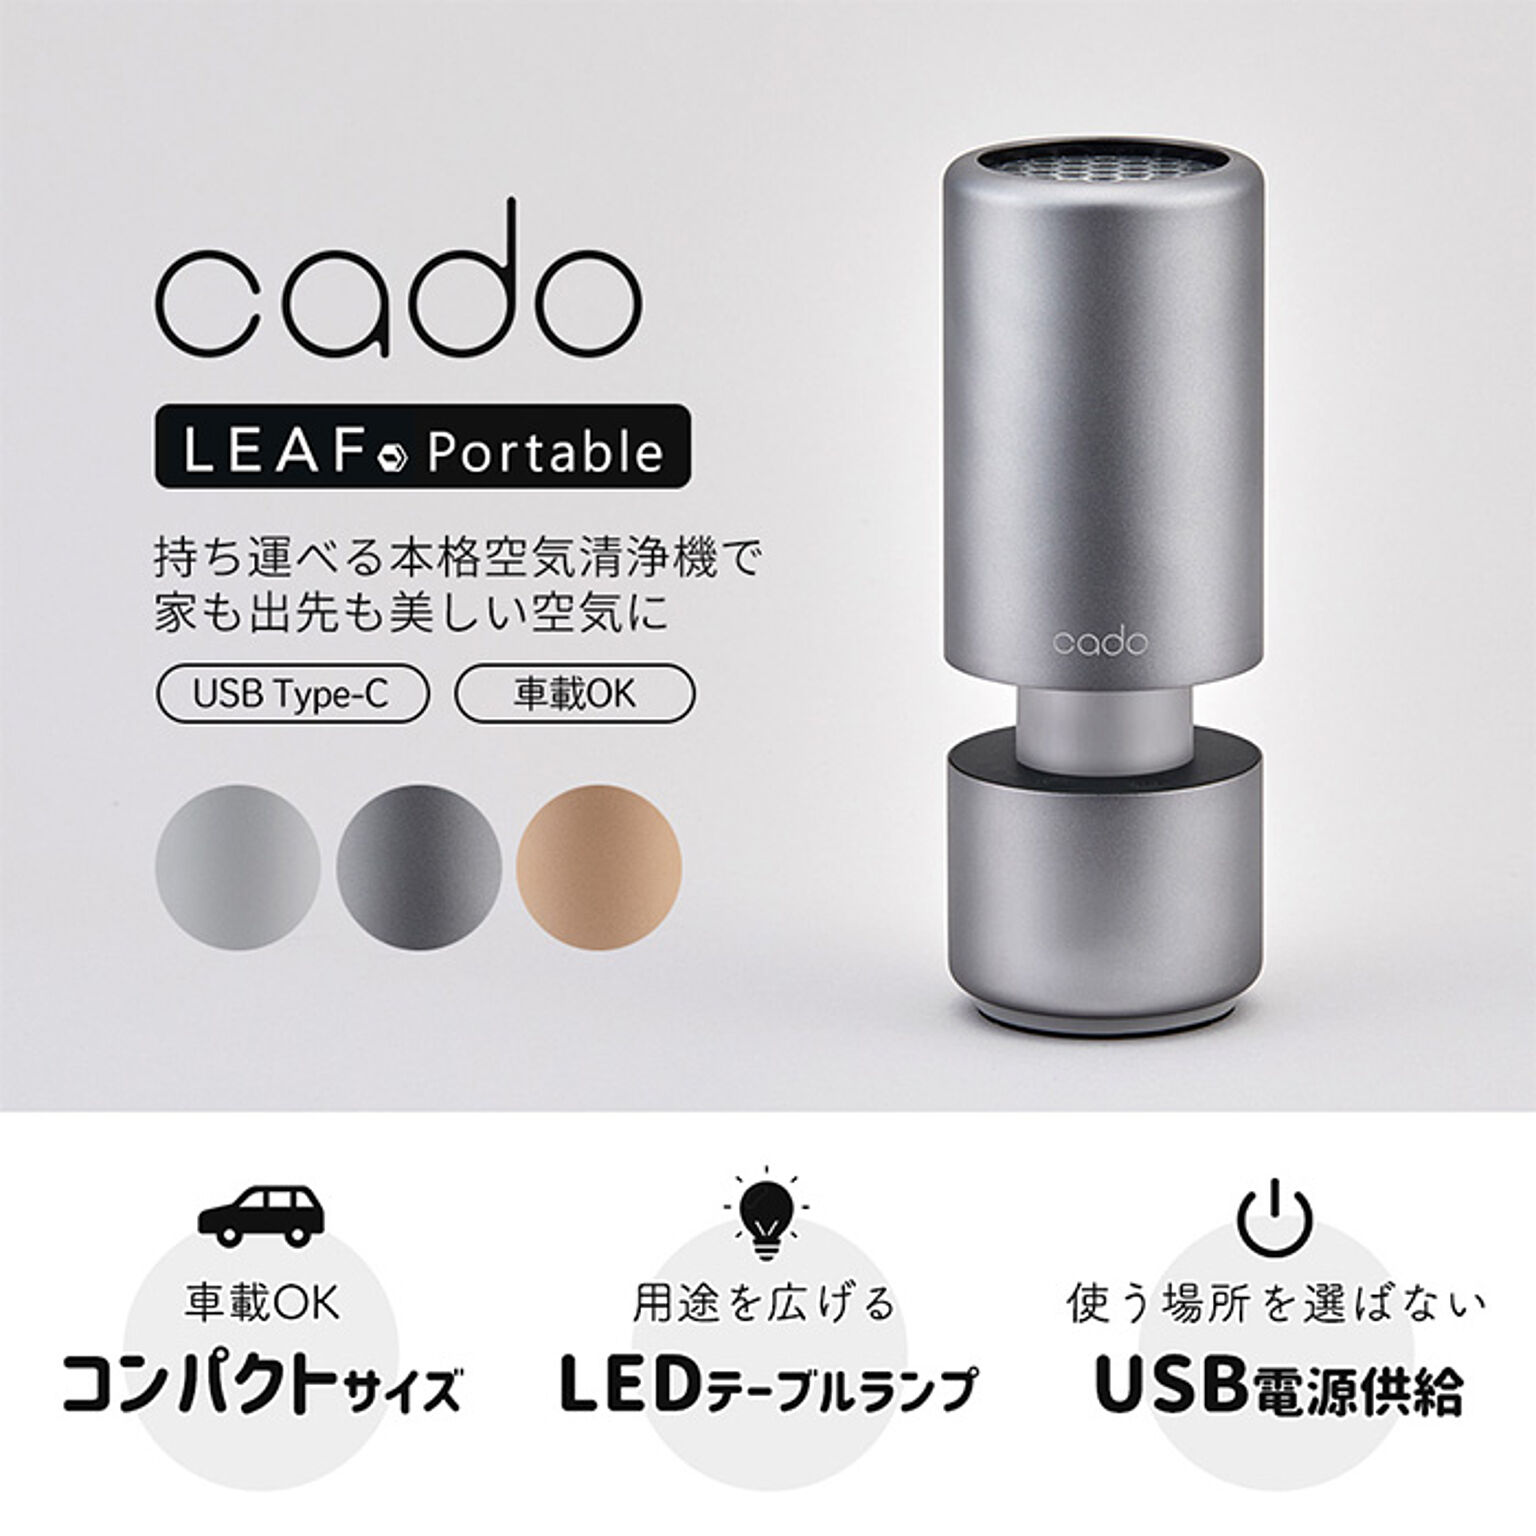 cado ポータブル空気清浄機 LEAF-Portable MP-C30 USB電源 LED ゴールド 通販  家具とインテリアの通販【RoomClipショッピング】